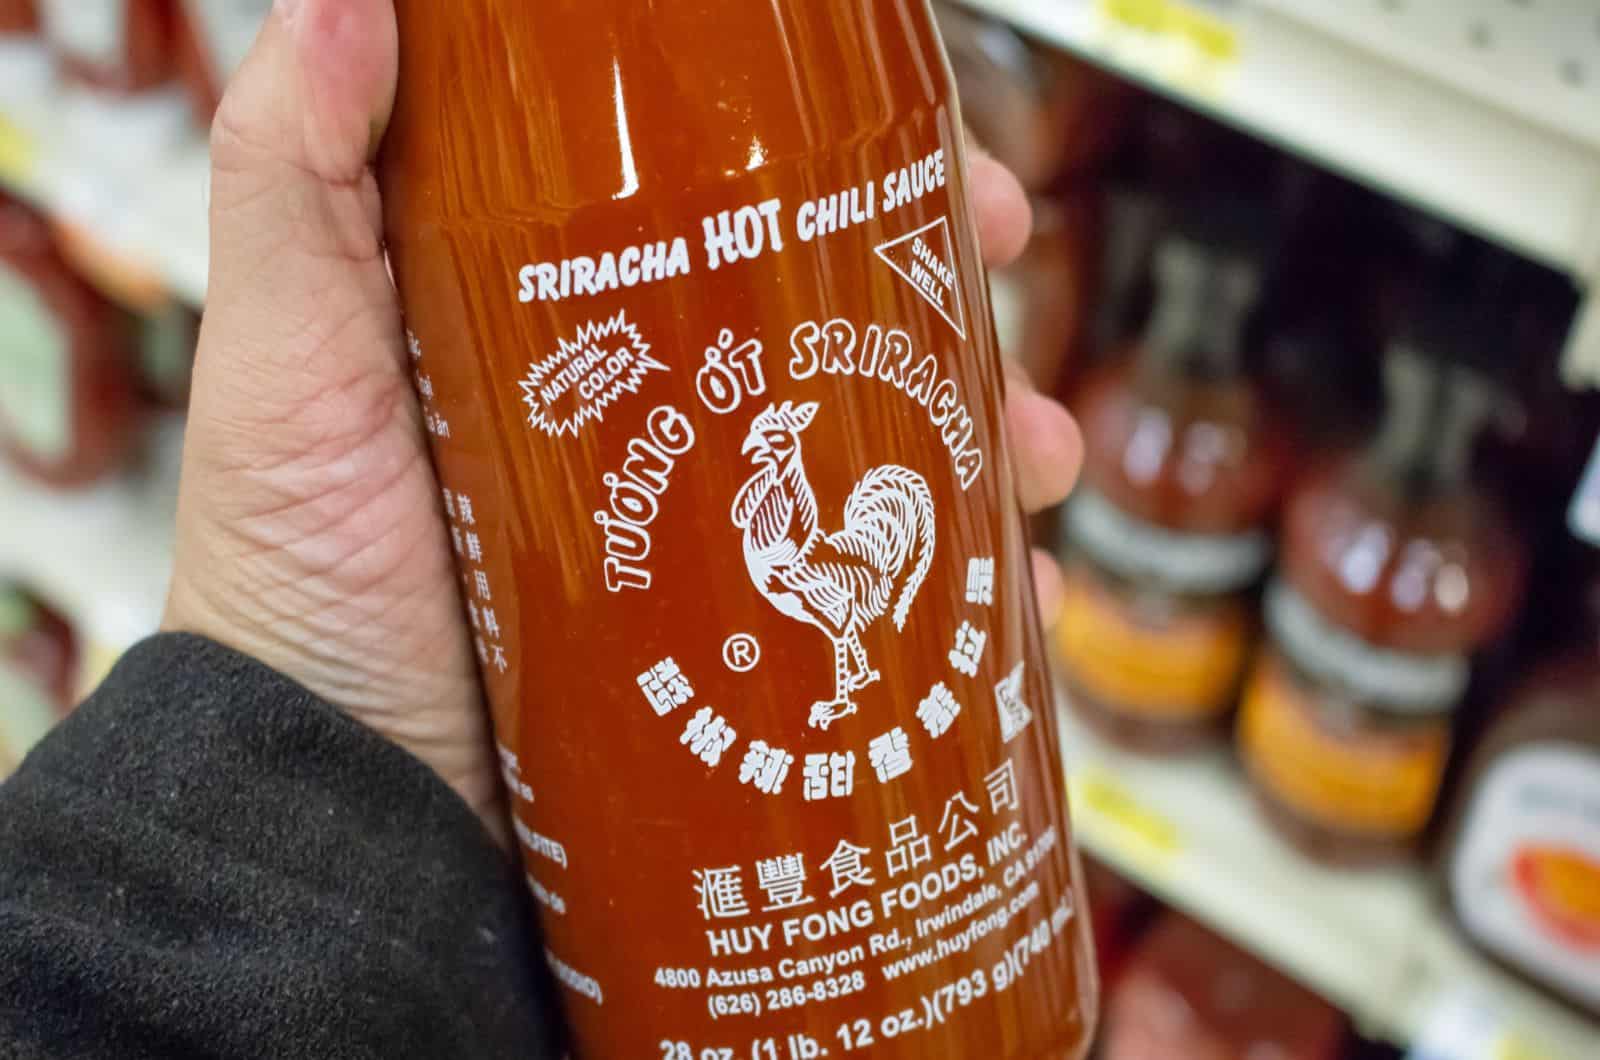 hand holds a bottle of Sriracha hot chili sauce